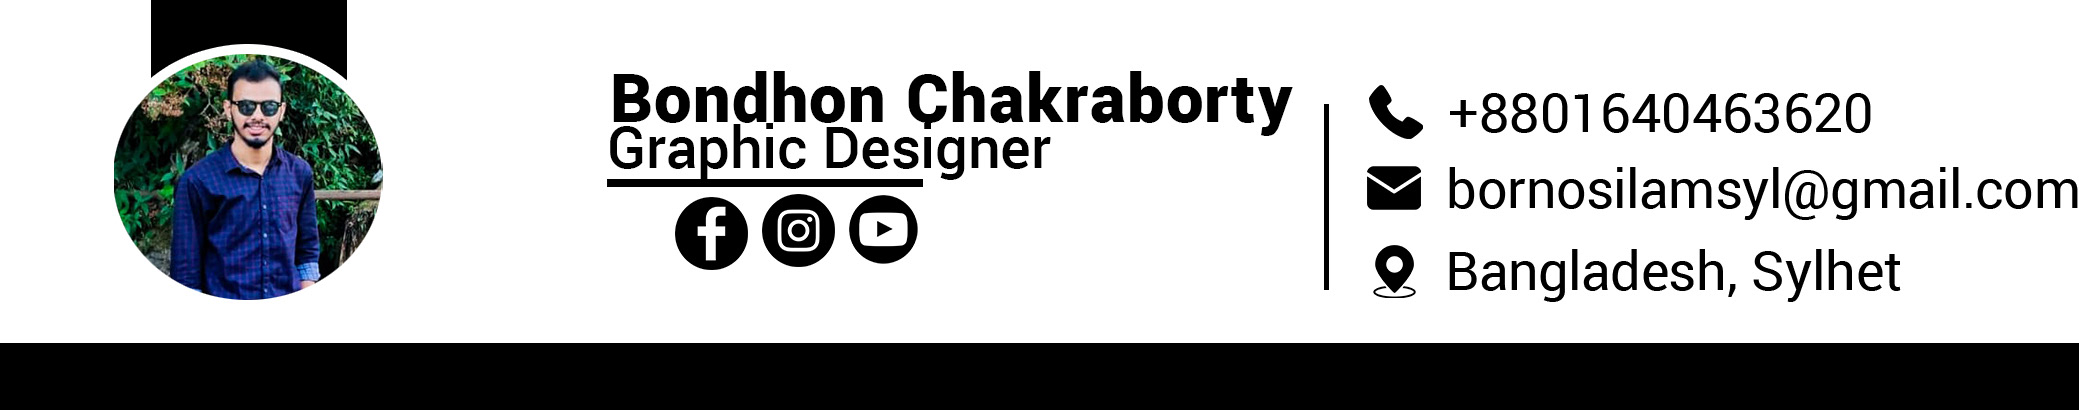 Banner de perfil de Bondhon Chakraborty